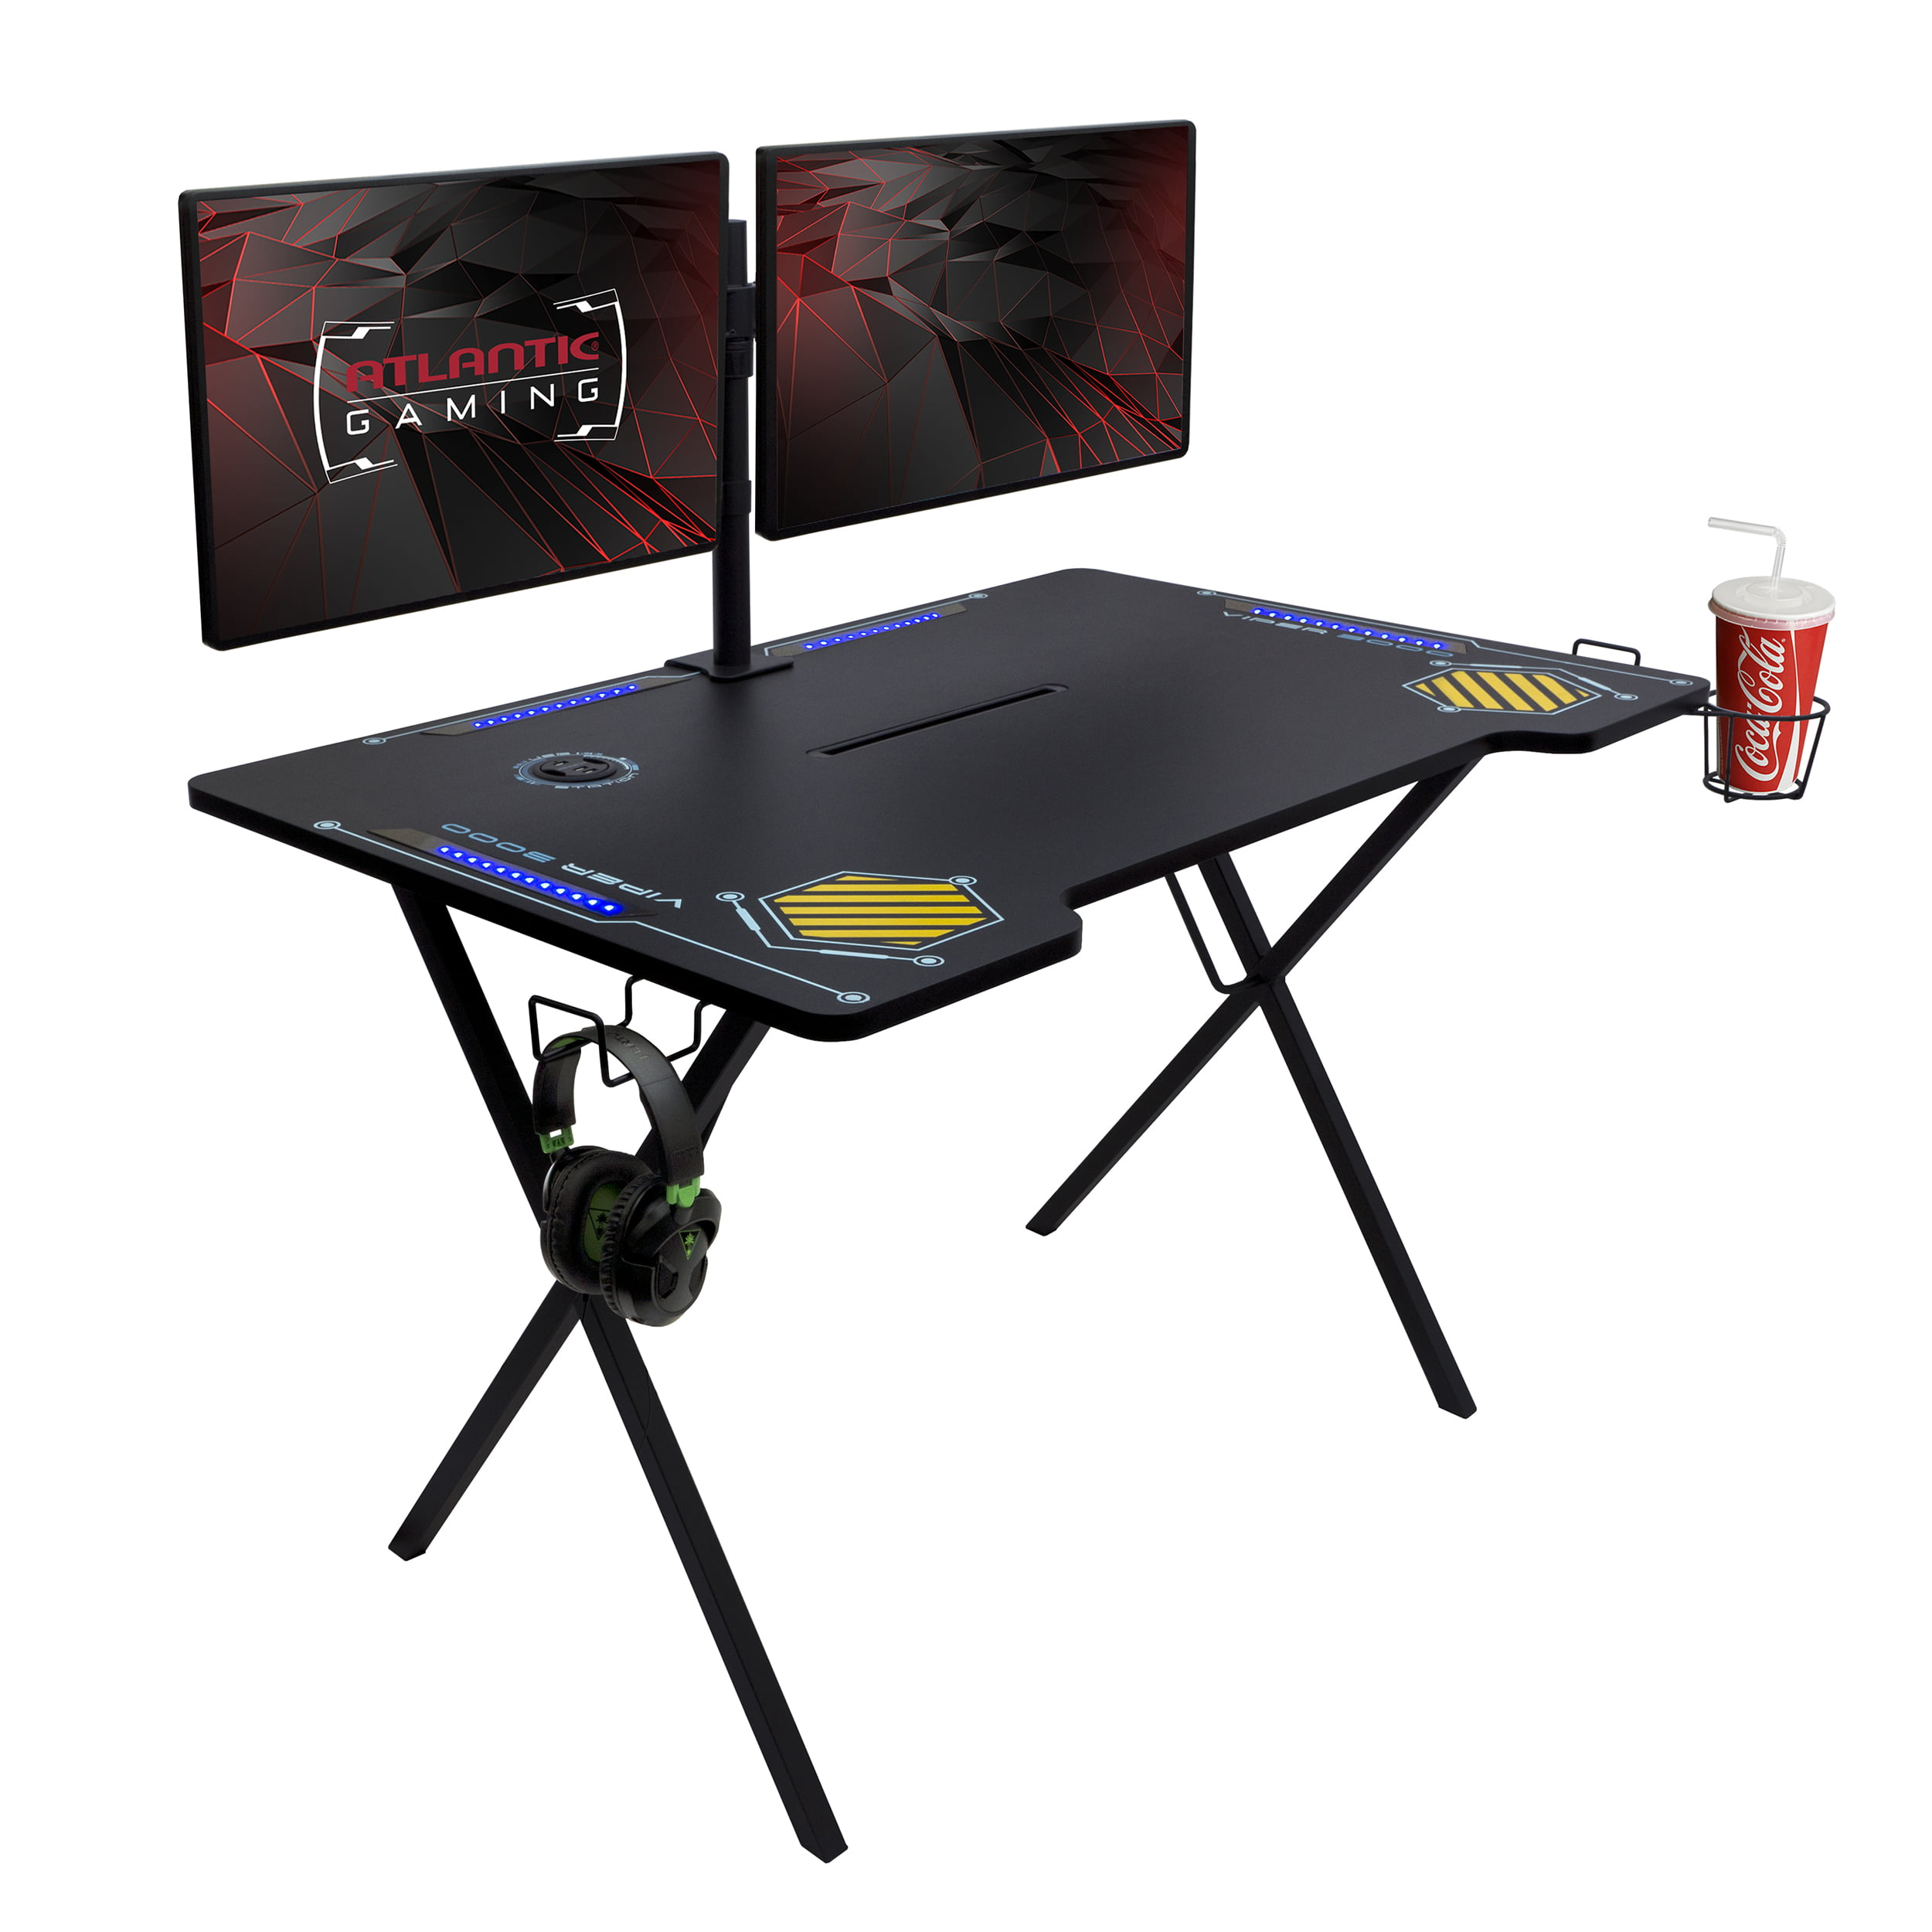 Atlantic Viper 3000 Gaming Desk with LED Lights - Walmart.com $75